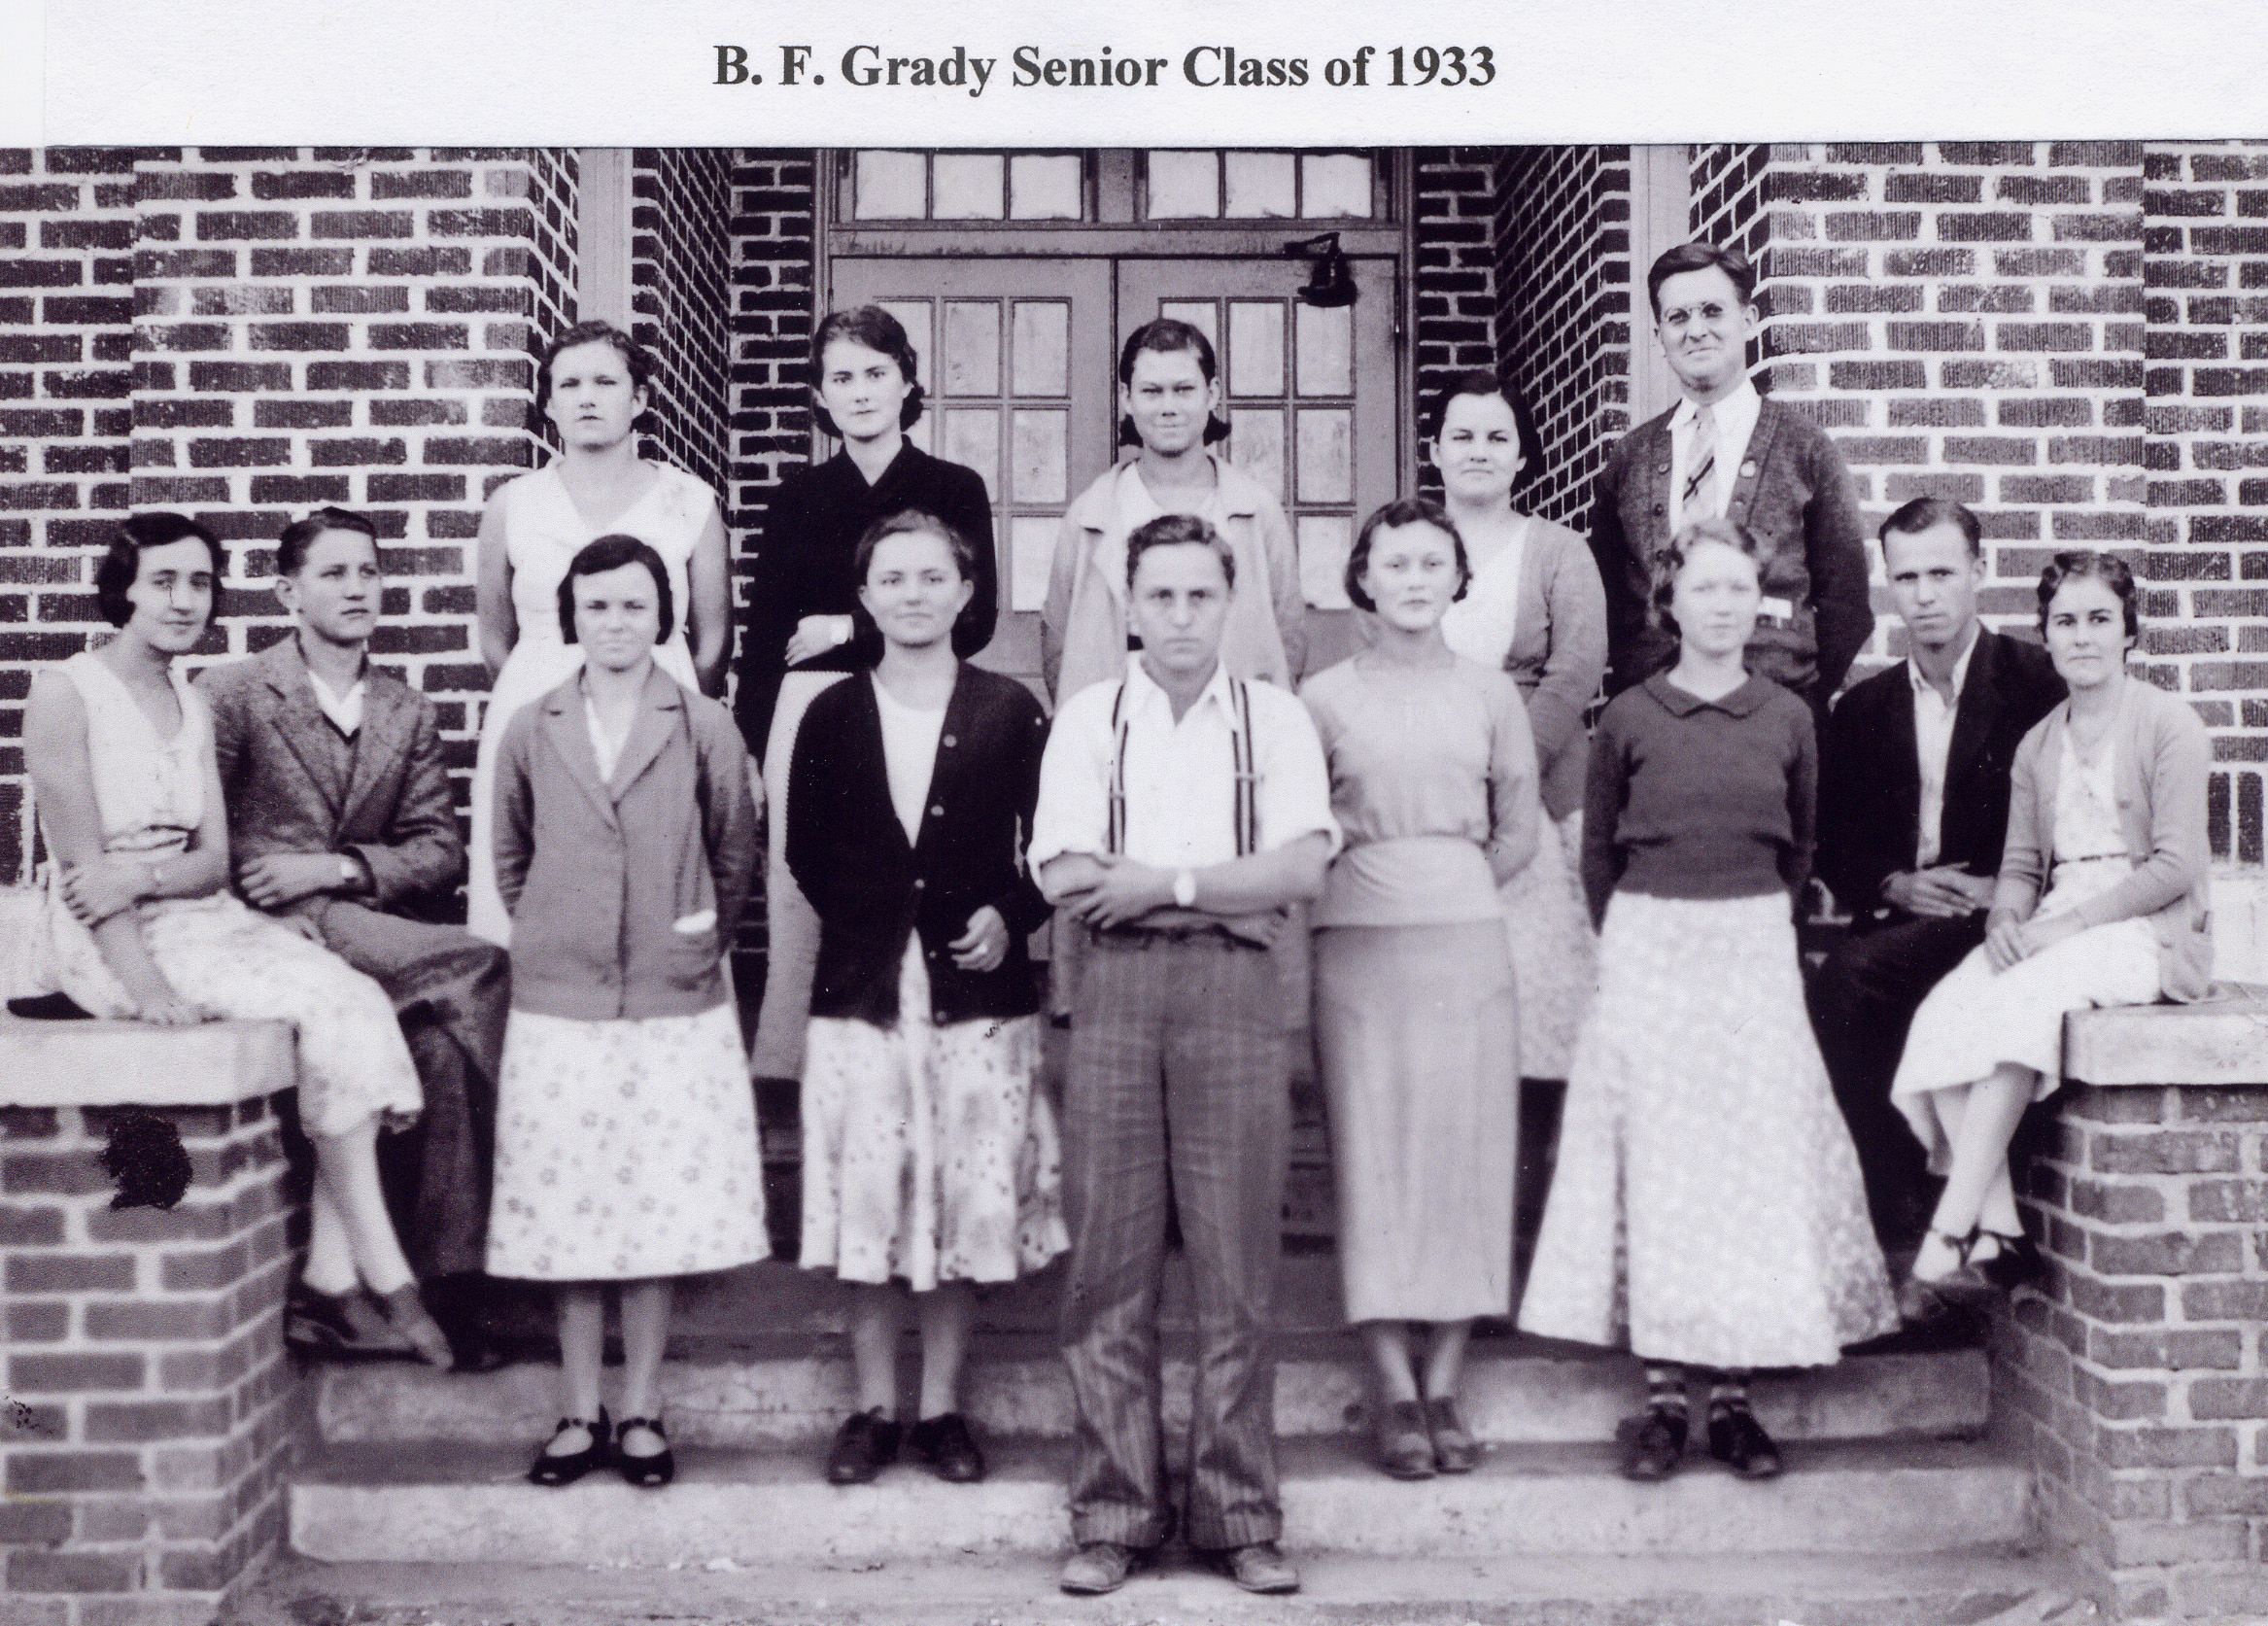 BF Grady Senior Class of 1933